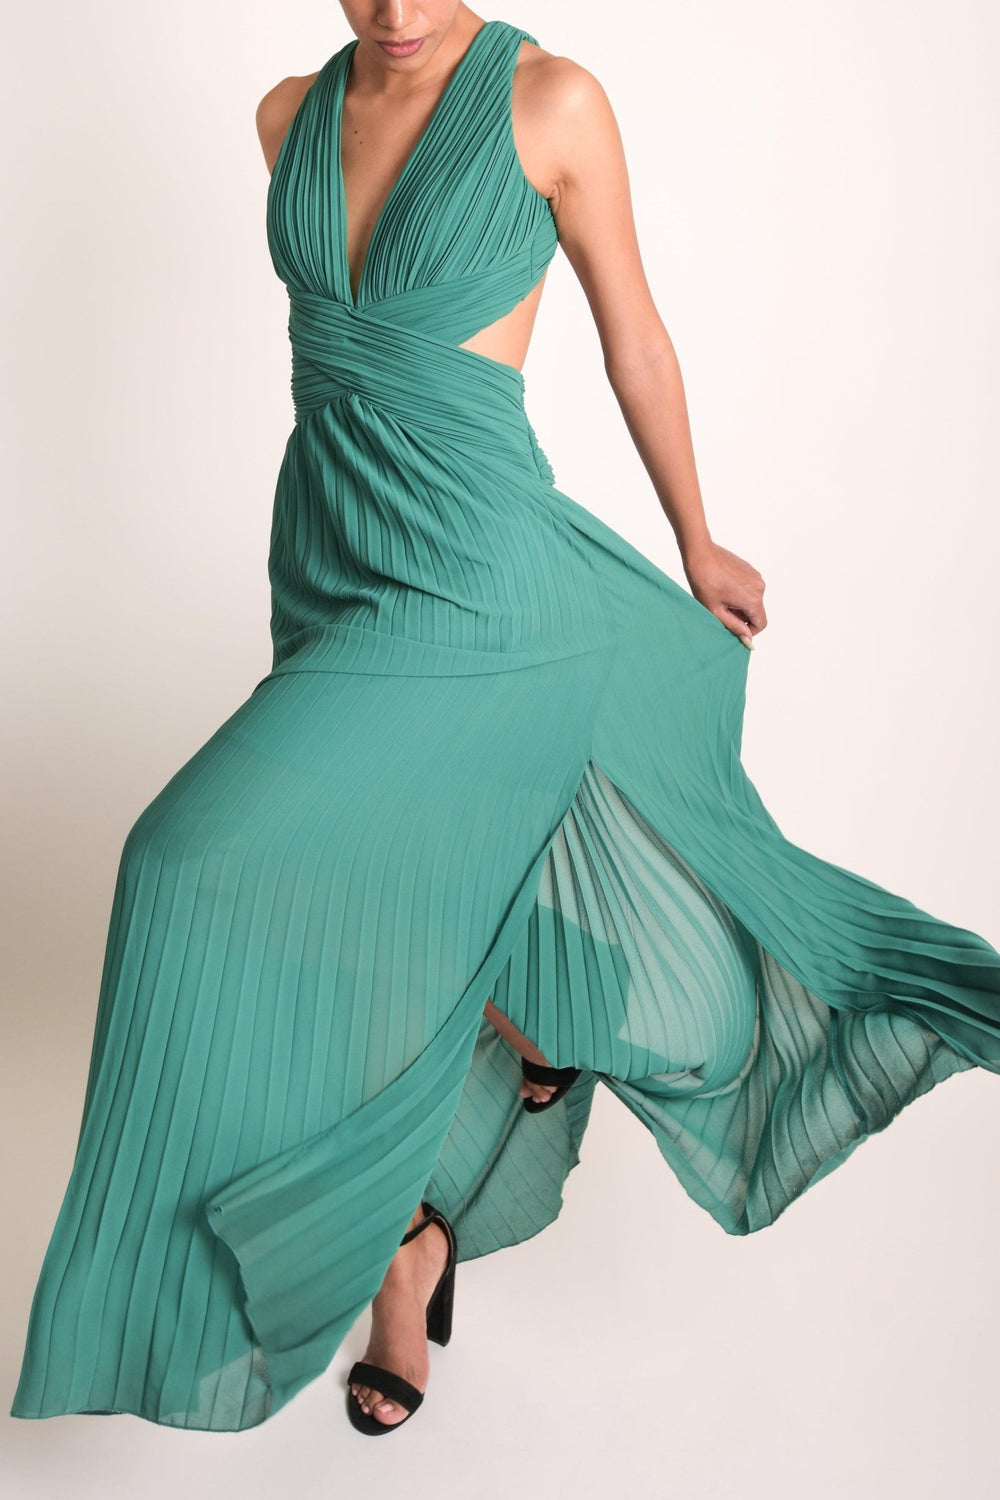 Velma - verde - Lend the Trend renta de vestidos mexico